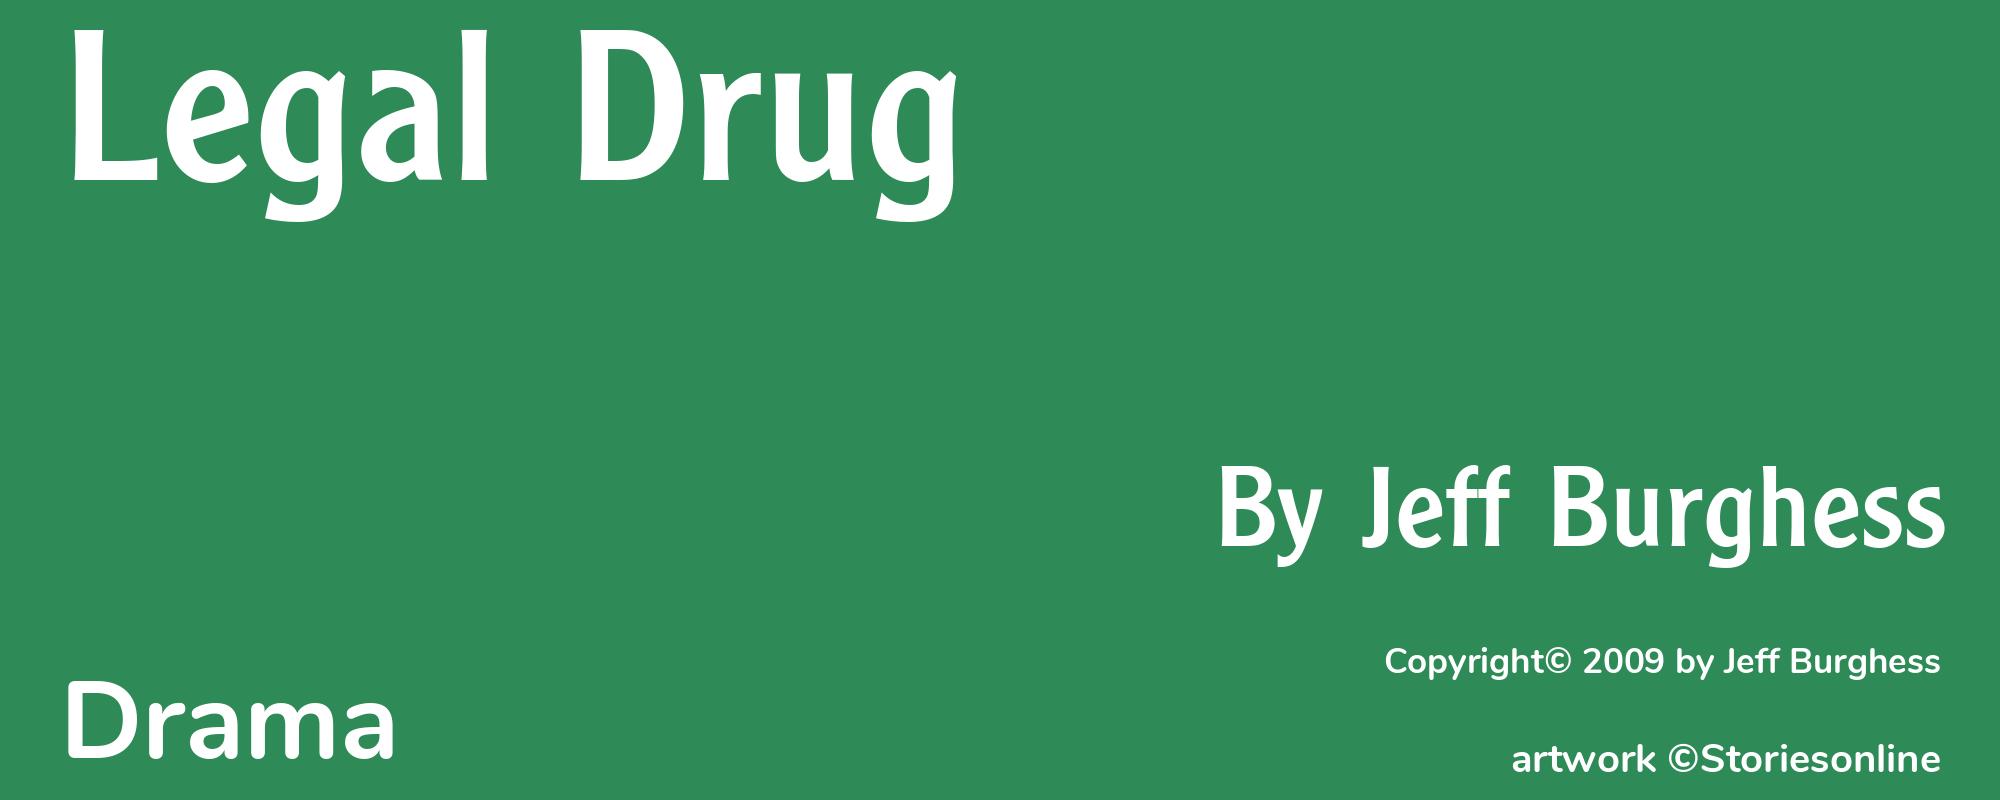 Legal Drug - Cover